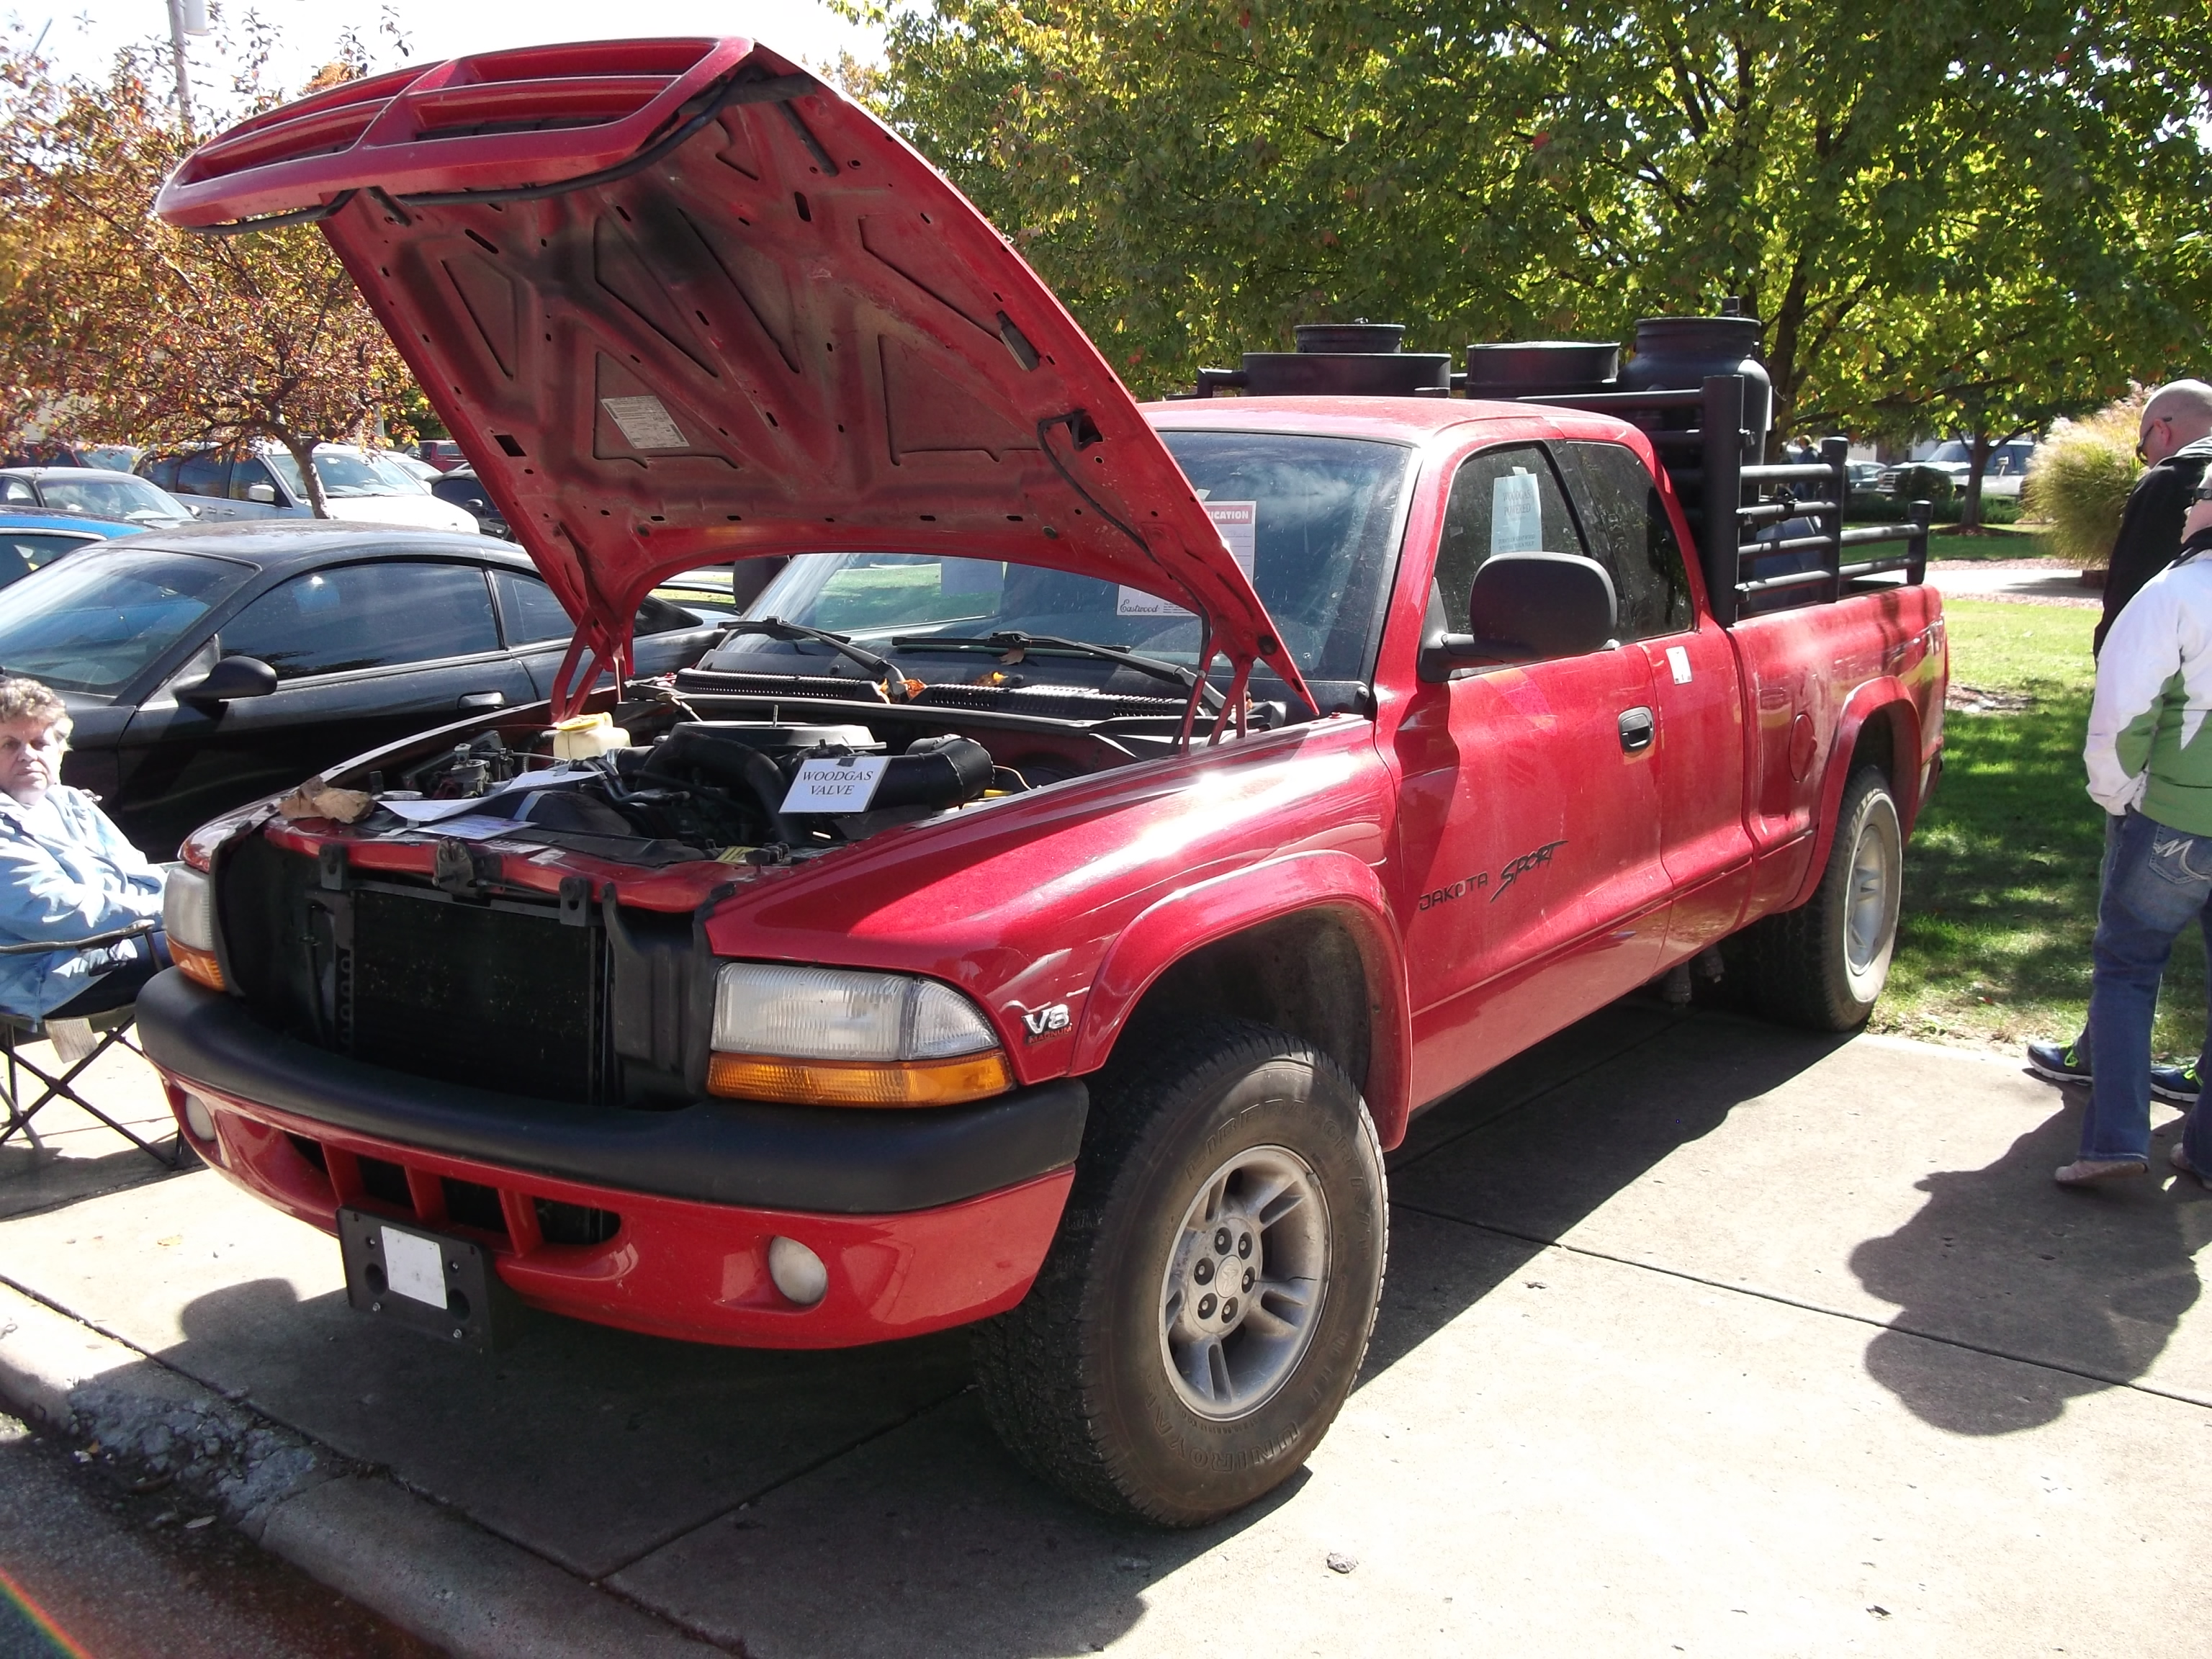 1998 Dodge Dakota Sport, wood gas powered | Flickr - Photo Sharing!